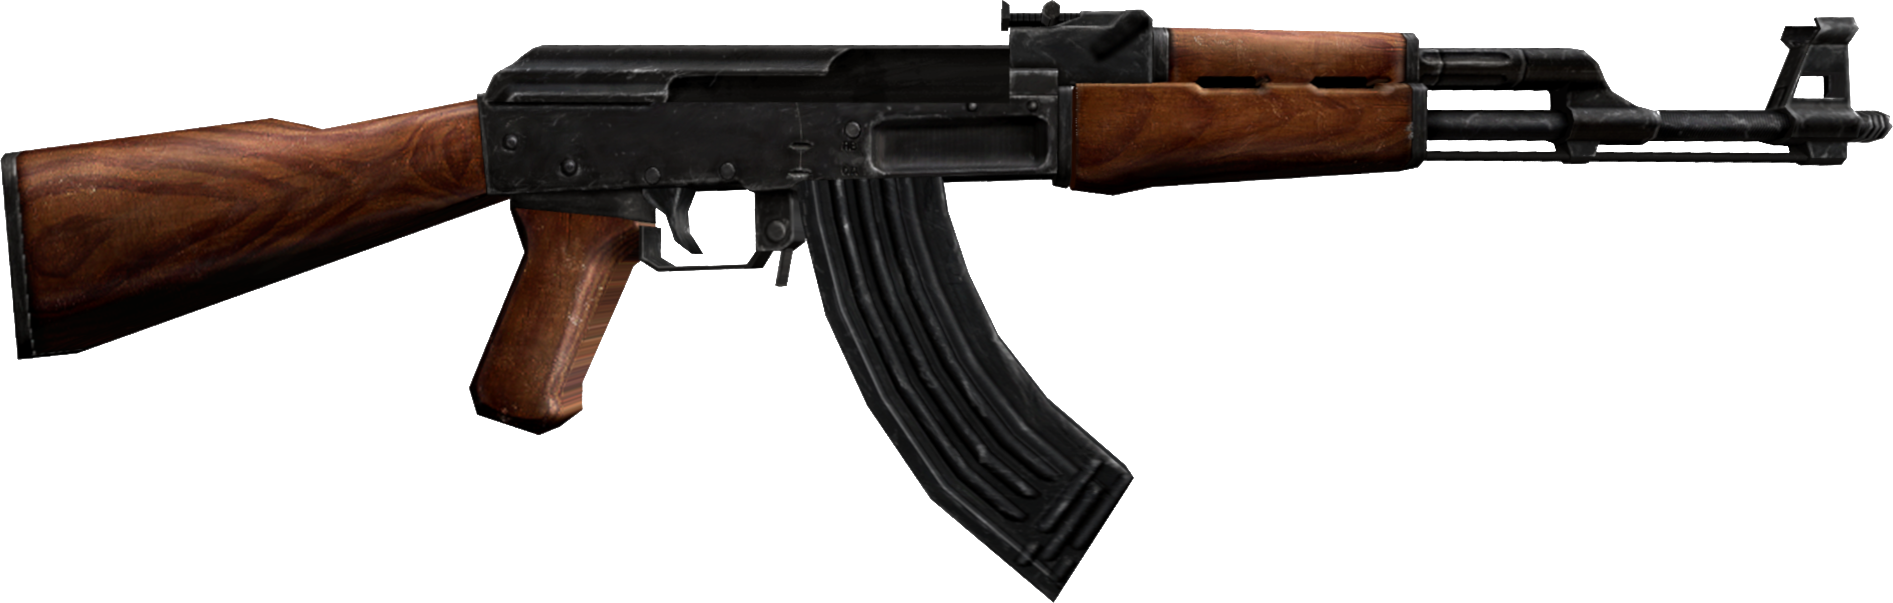 Weapon Transparent PNG Image